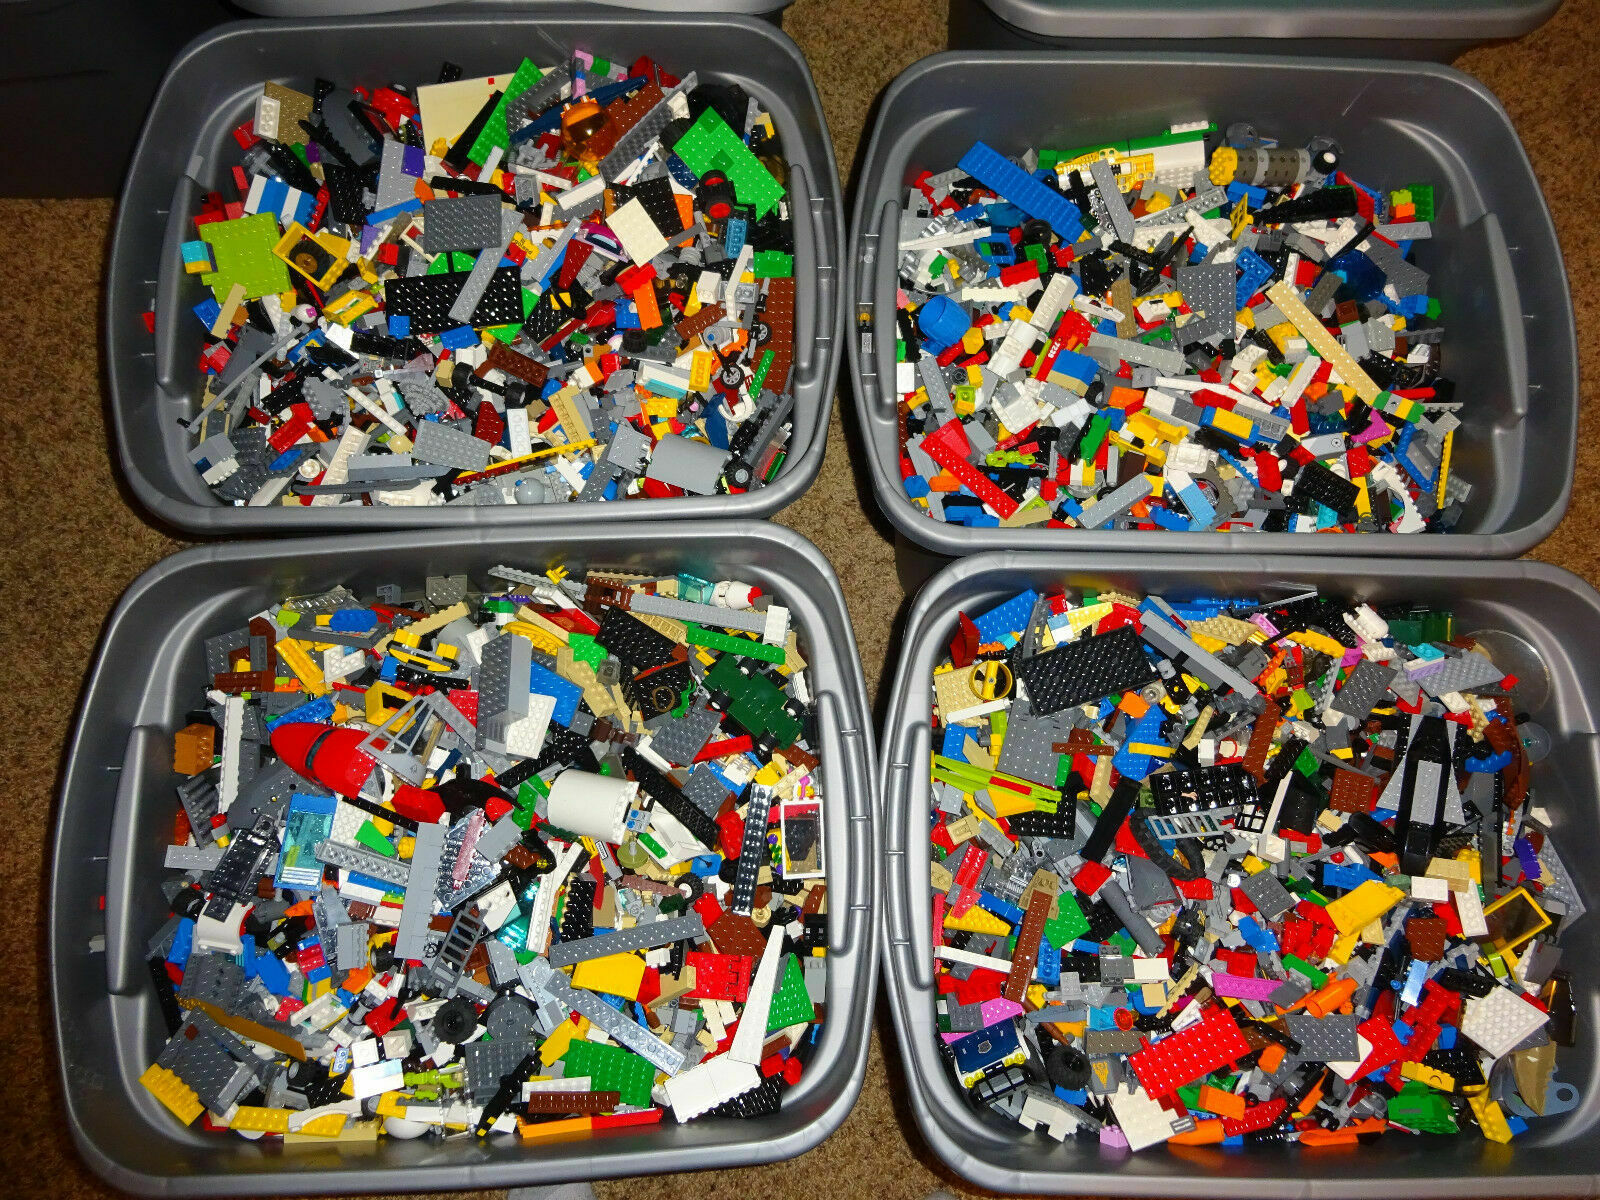 Lego 1 Pound - Bricks Parts & Pieces Mixed Bulk Lot Buy 5 Lb Get 1 More Lb Free